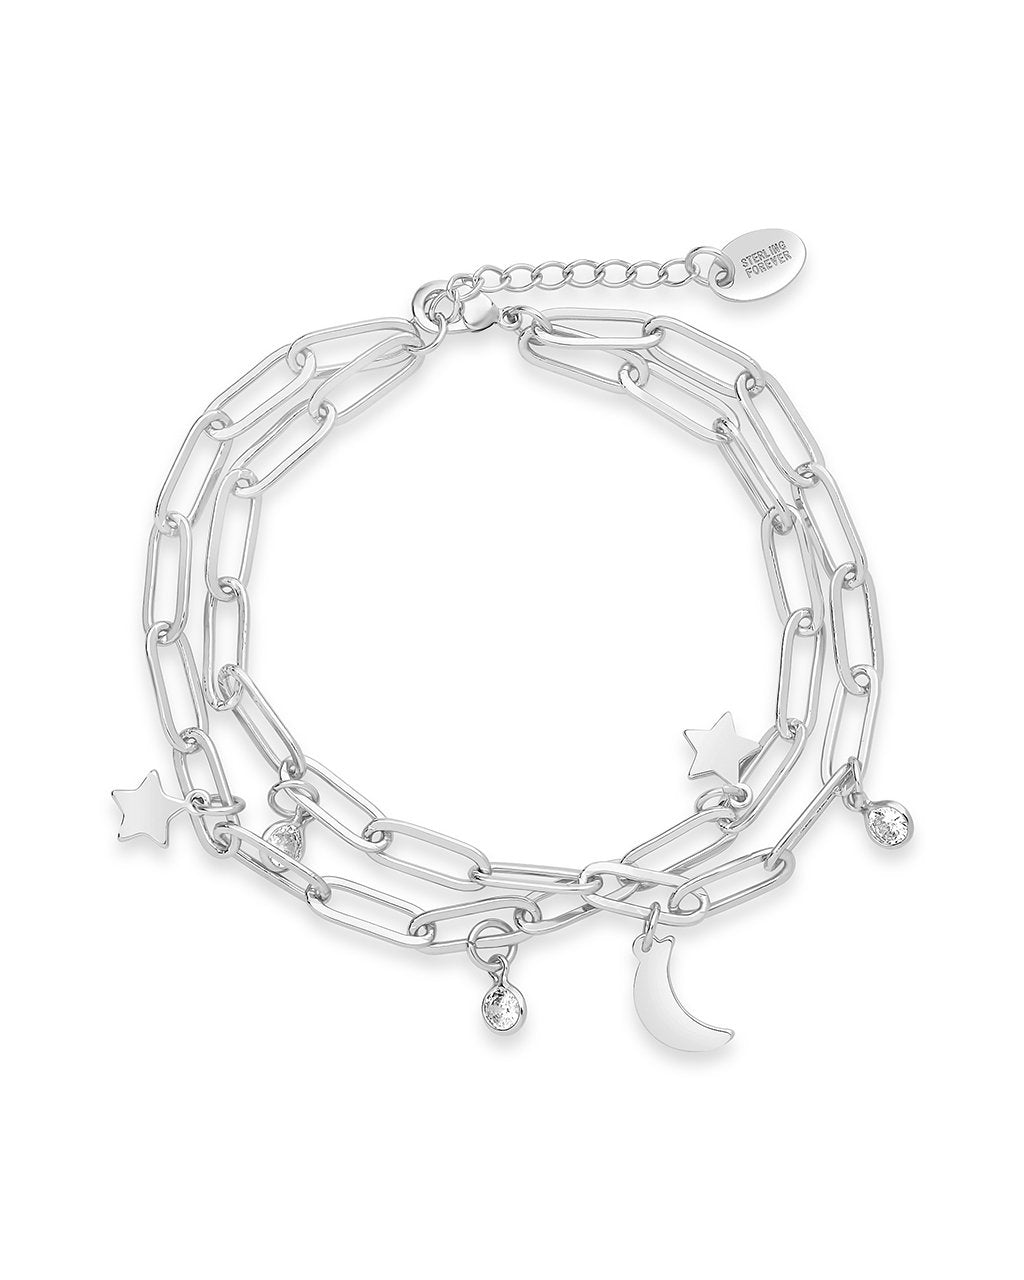 CZ, Moon, & Star Double Chain Bracelet